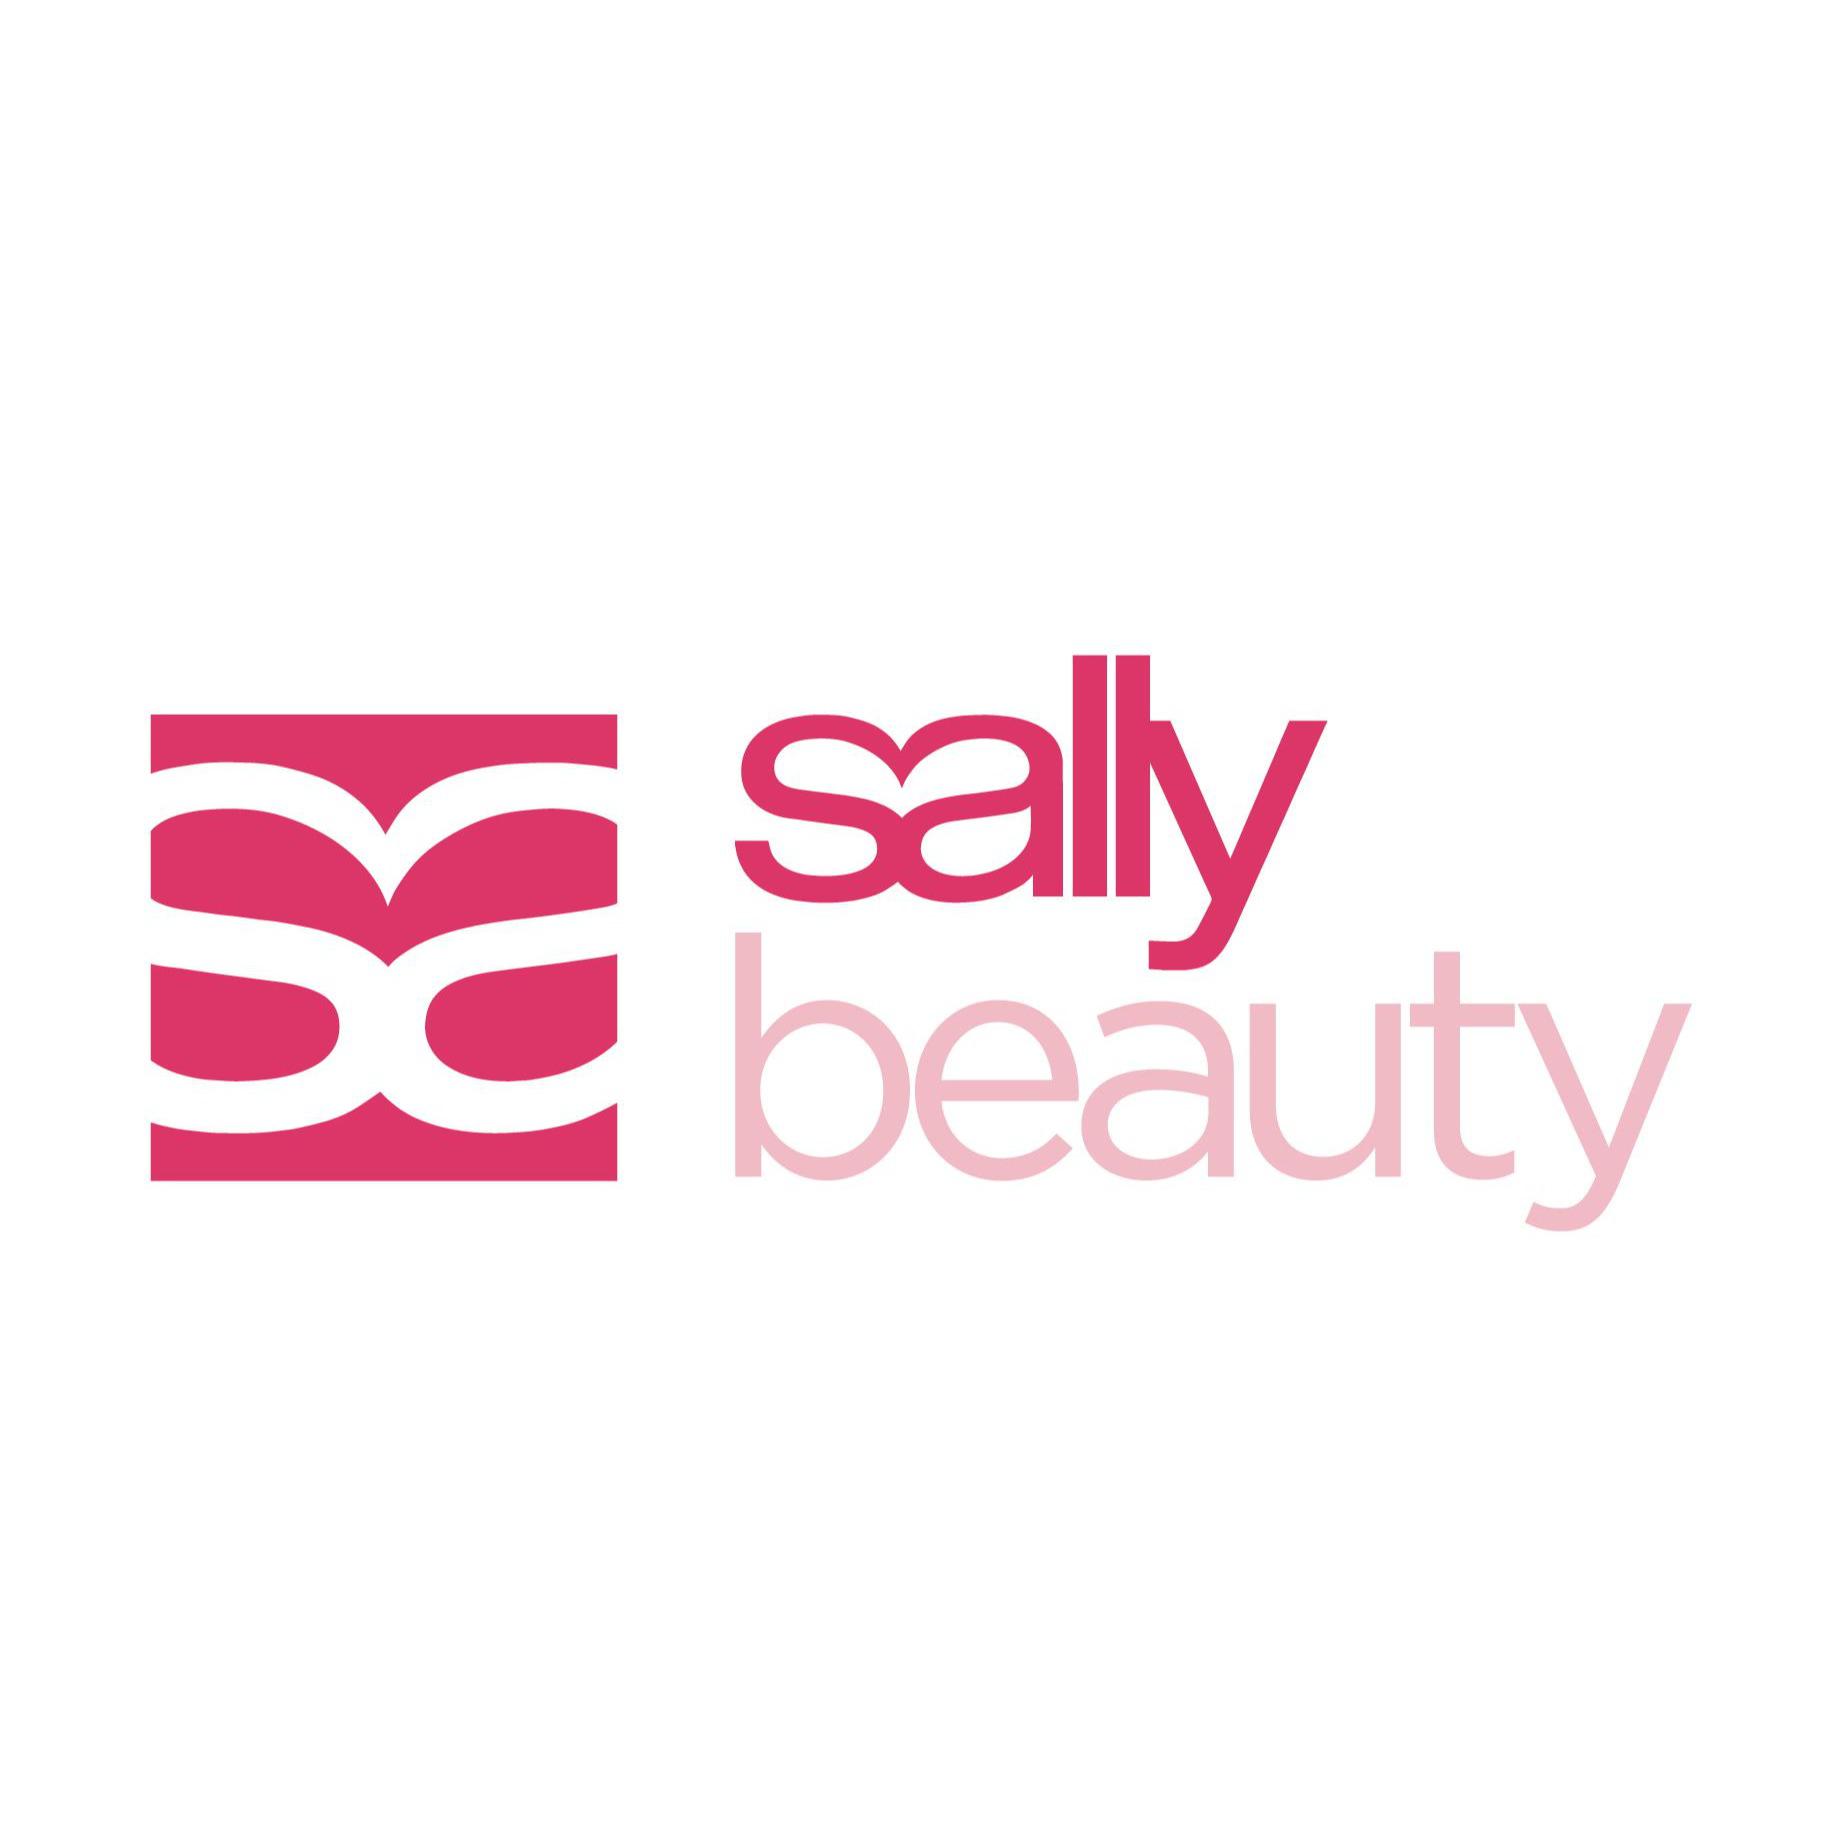 Sally Beauty - Morecambe, Lancashire LA3 3PE - 01524 843371 | ShowMeLocal.com